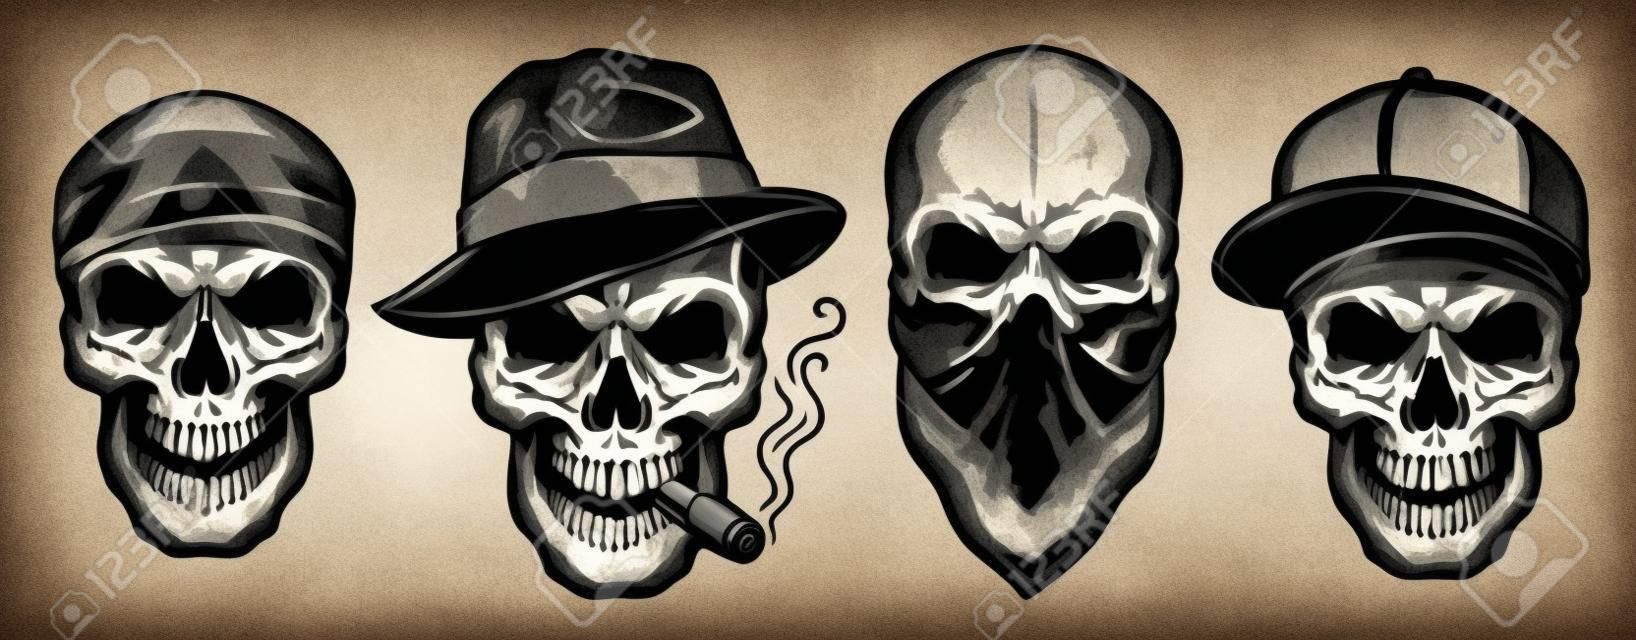 Skulls in monochrome vintage style, gangsters and mafia set. Vector illustration.